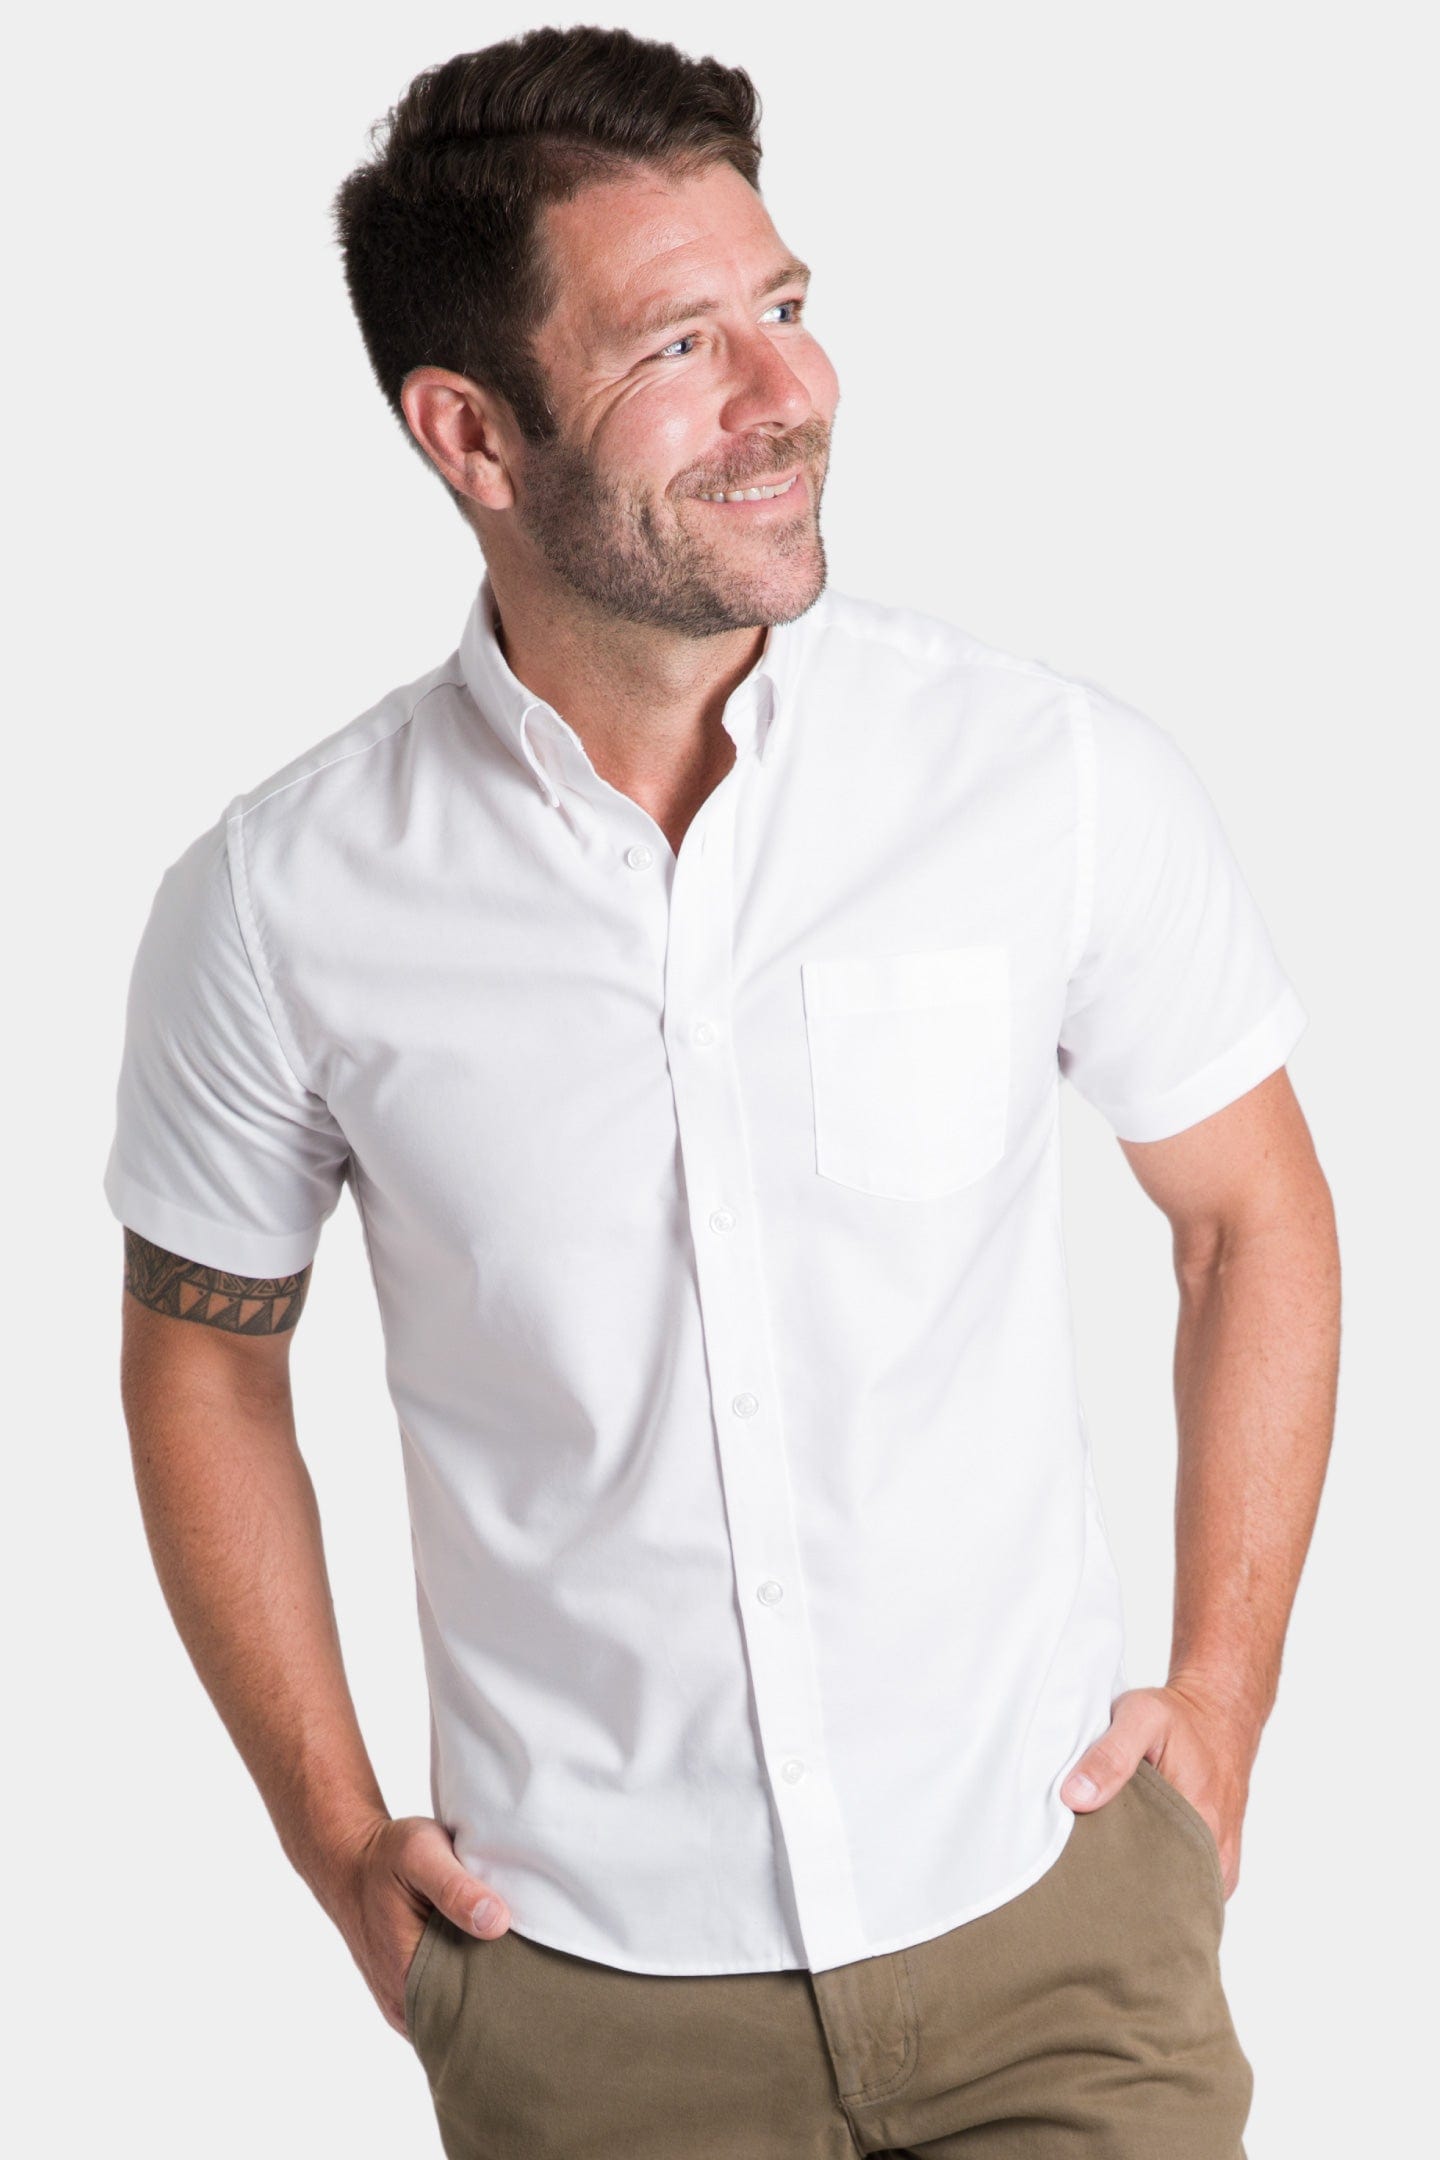 Mens Wrinkle Free White Shirt Full Sleeves Soft Touch